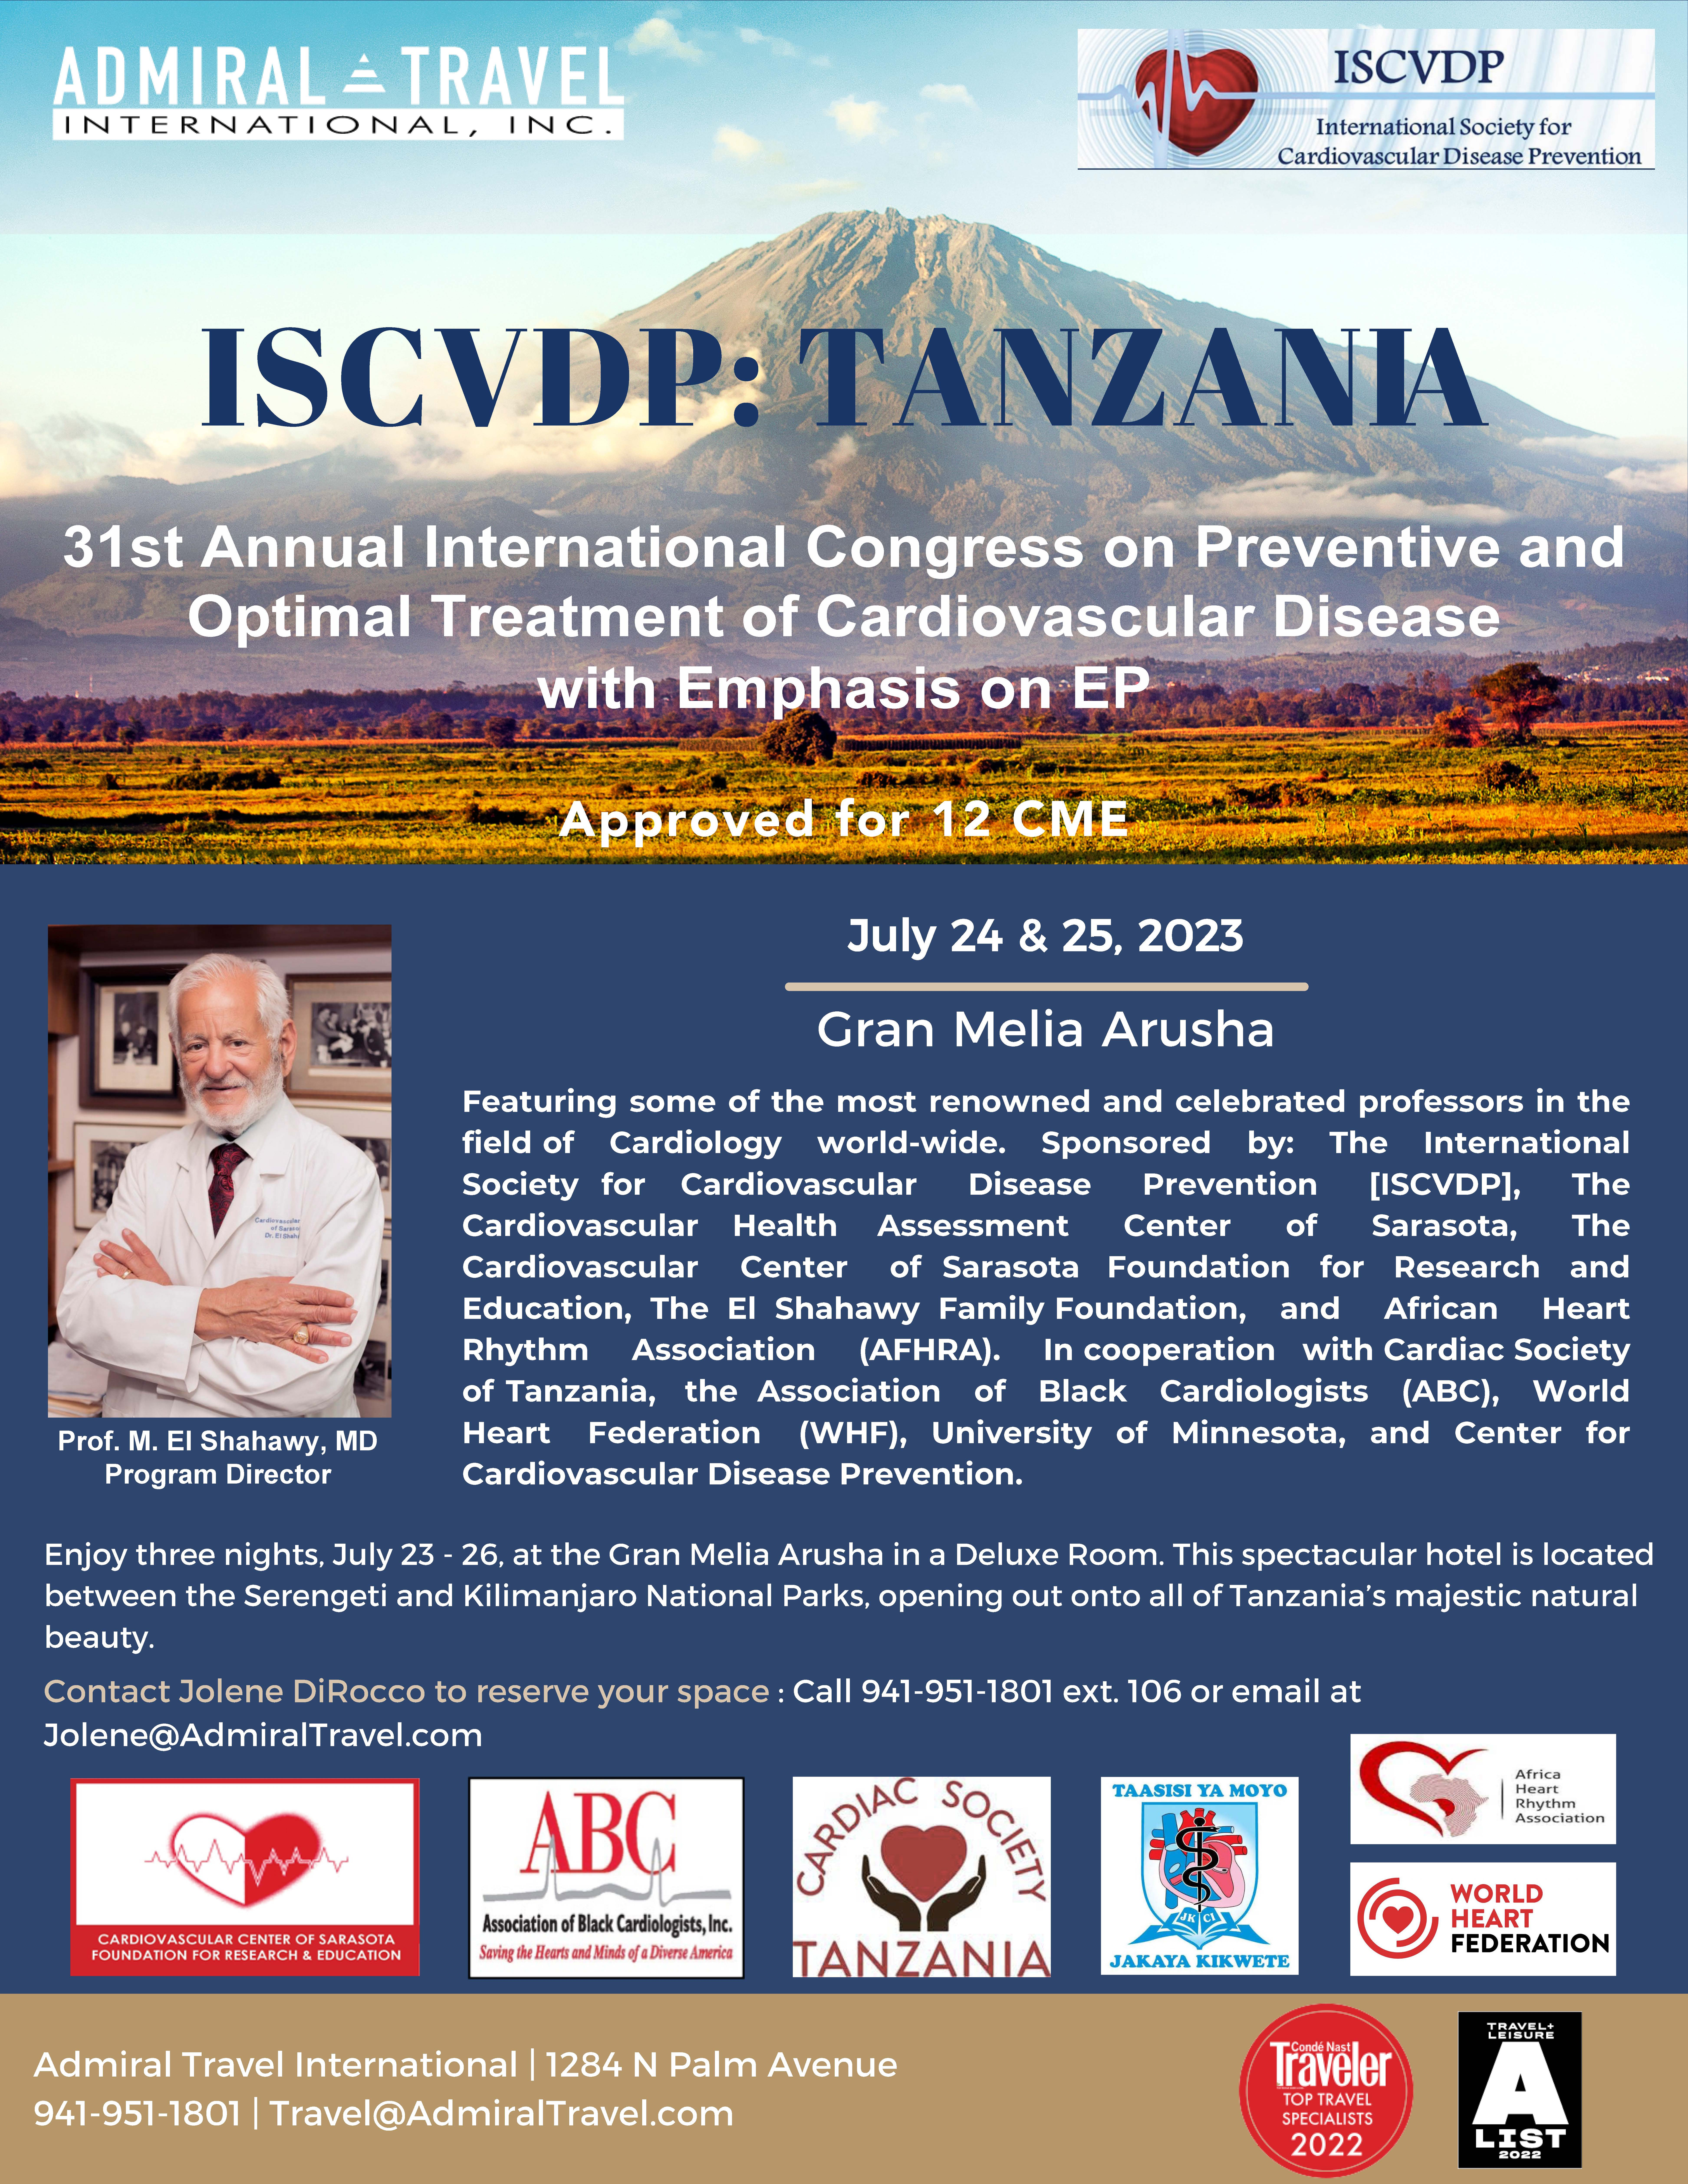 ISCVDP: Tanzania 2023